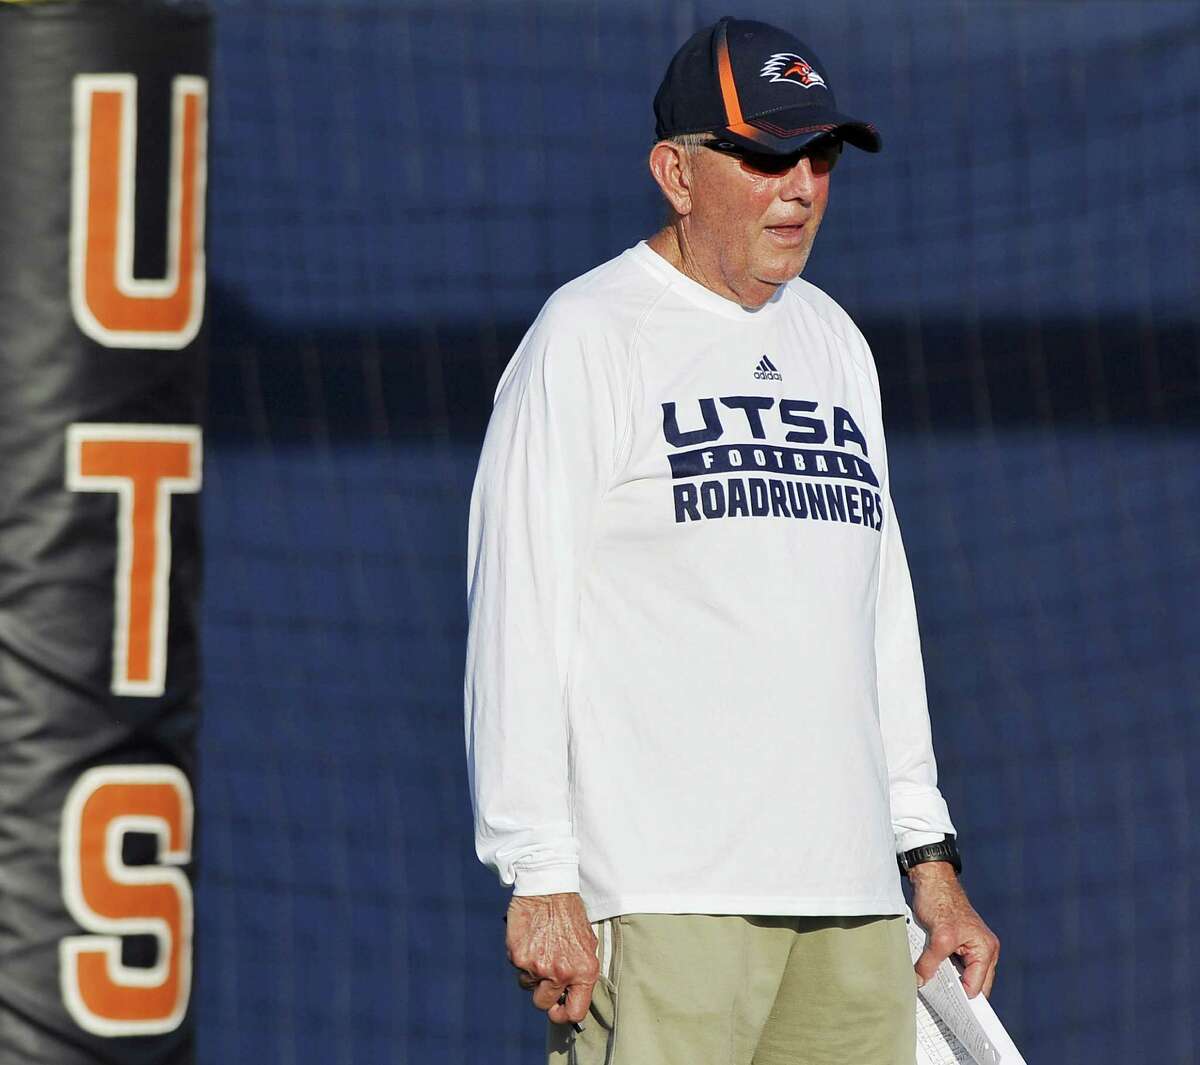 UTSA head coach Larry Coker watches drills during football practice, Thursday, Aug. 14, 2014, at UTSA in San Antonio. (Darren Abate/For the Express-News)